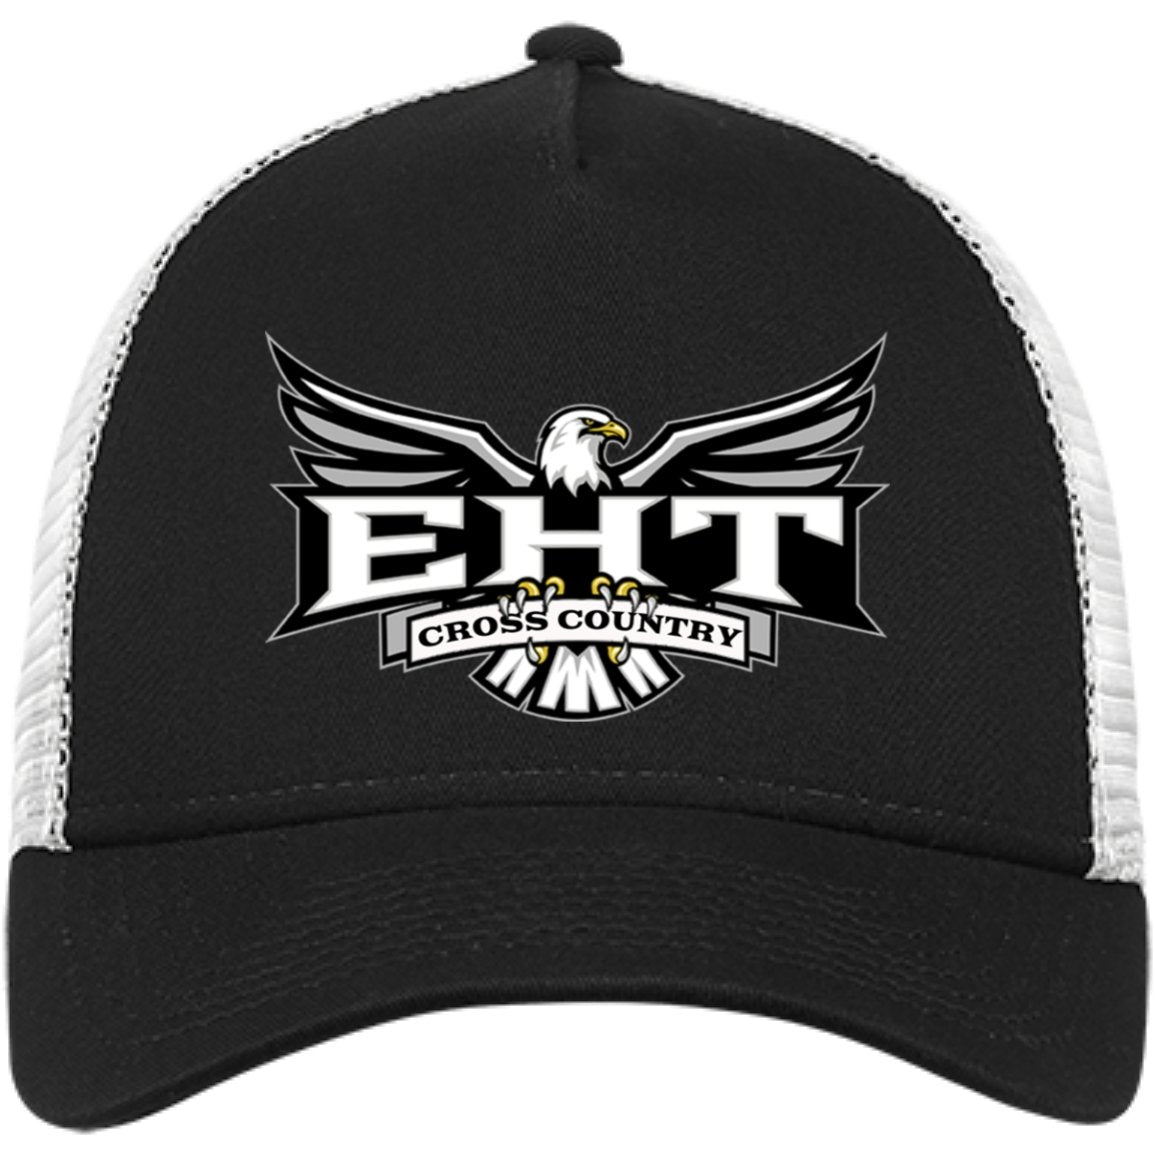 EHTXC Embroidered Snapback Trucker Cap